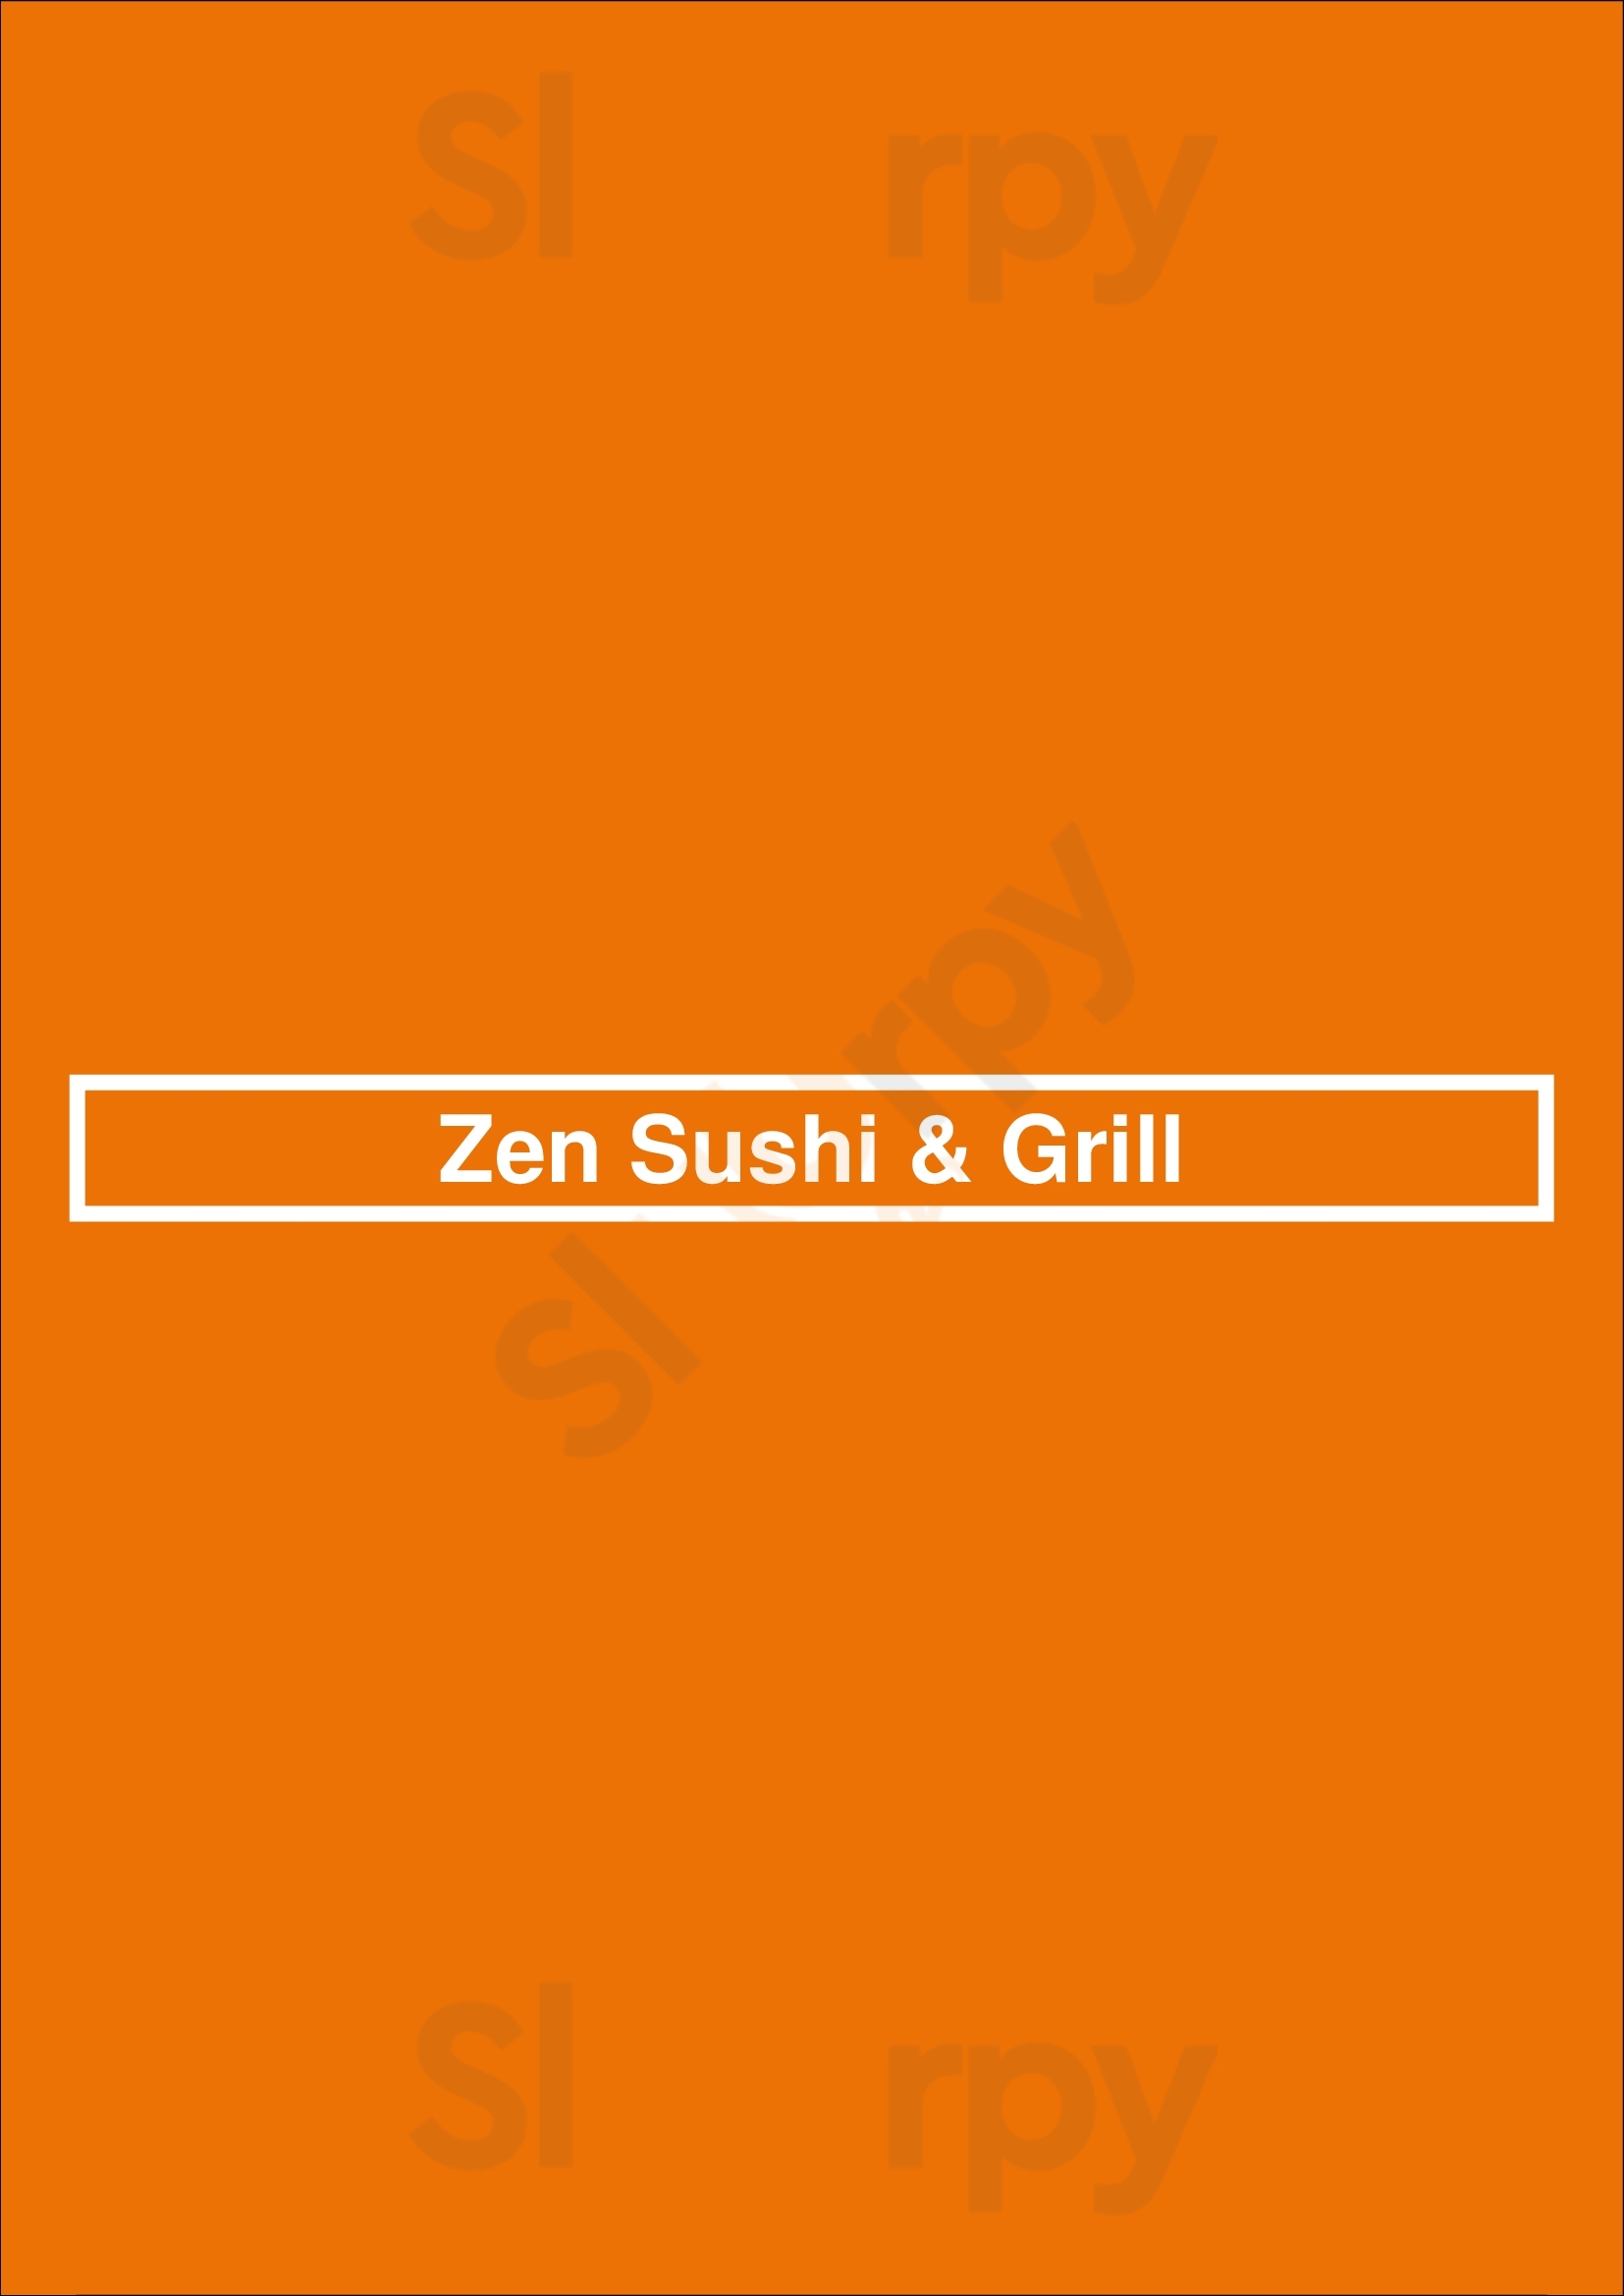 Zen Sushi & Grill Edmonton Menu - 1